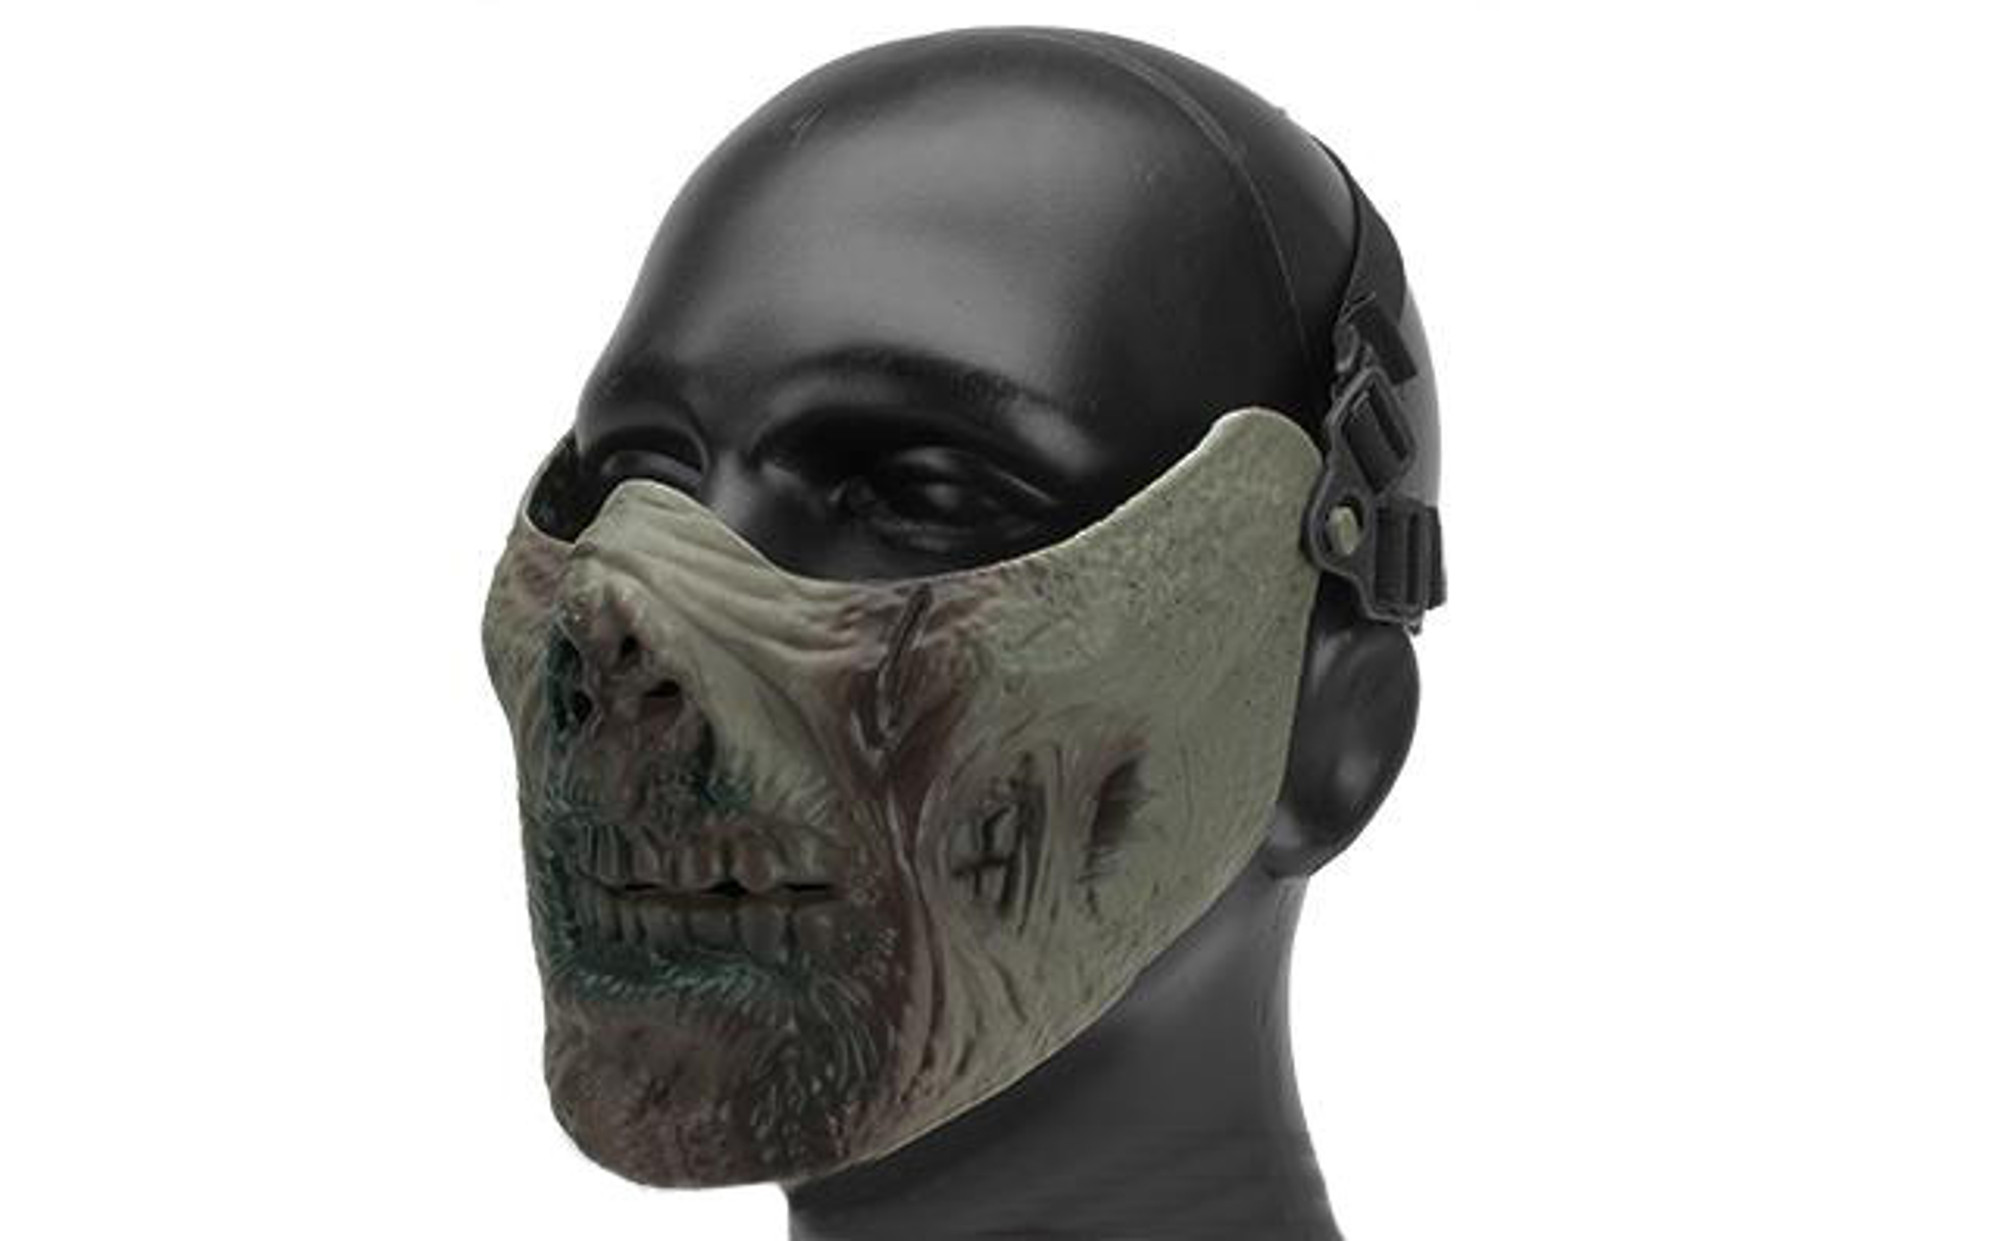 6mmProShop "Zombie" Iron Face Lower Half Mask - Zombie II